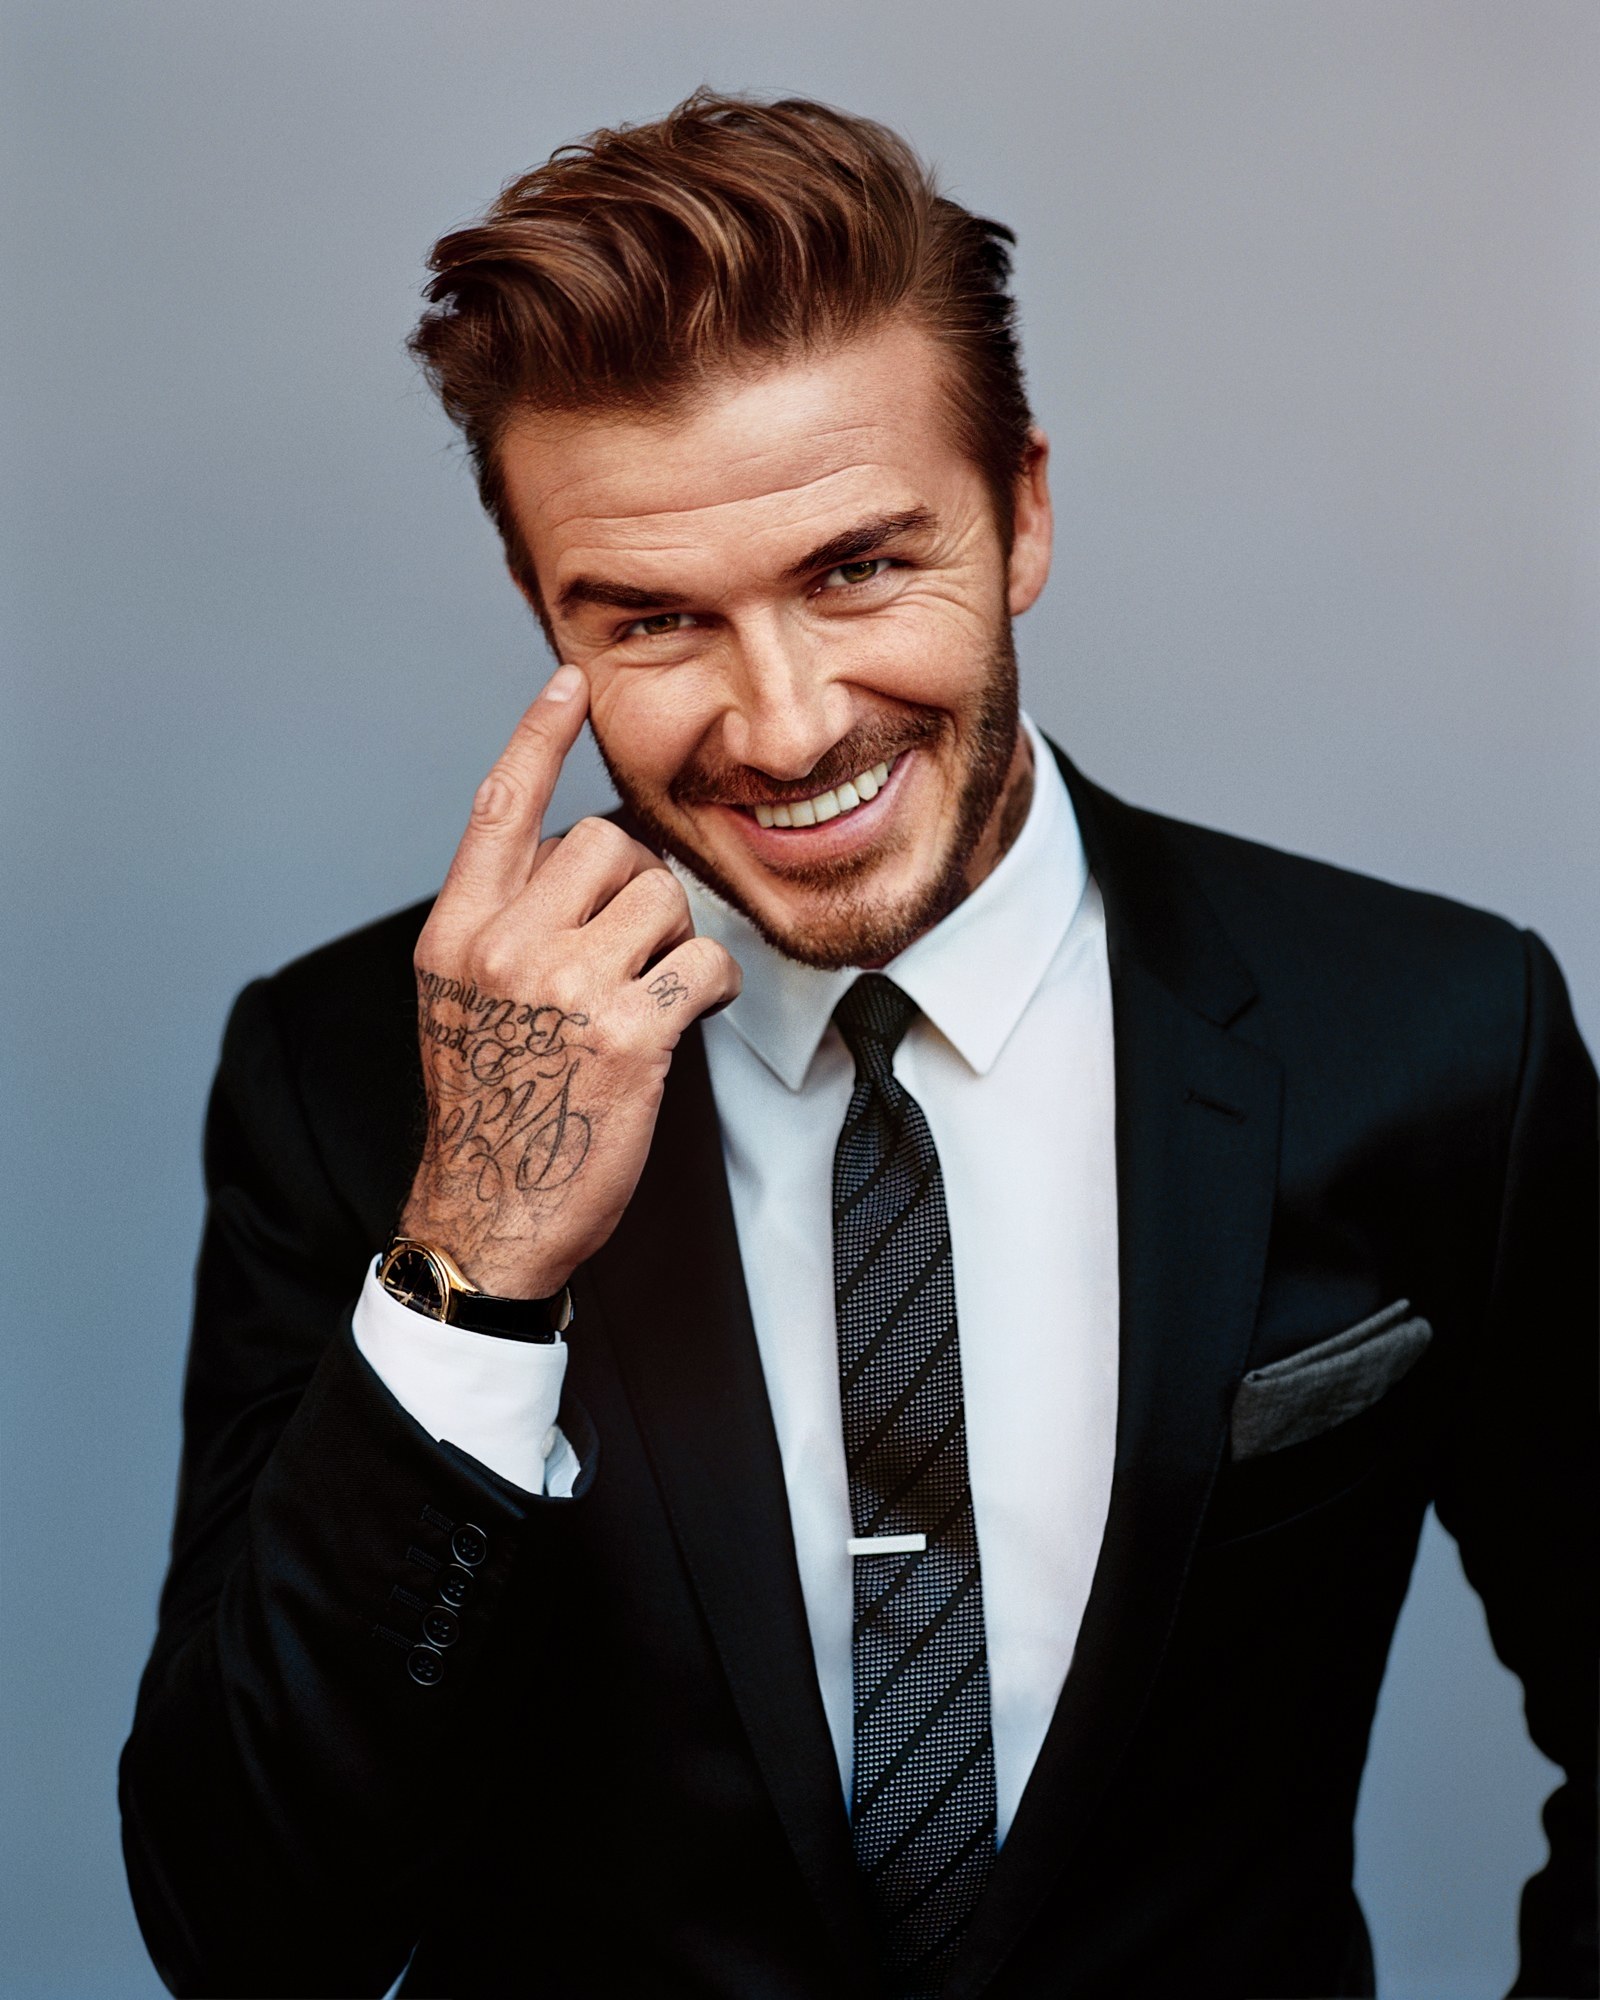 David Beckham 2017 pictures